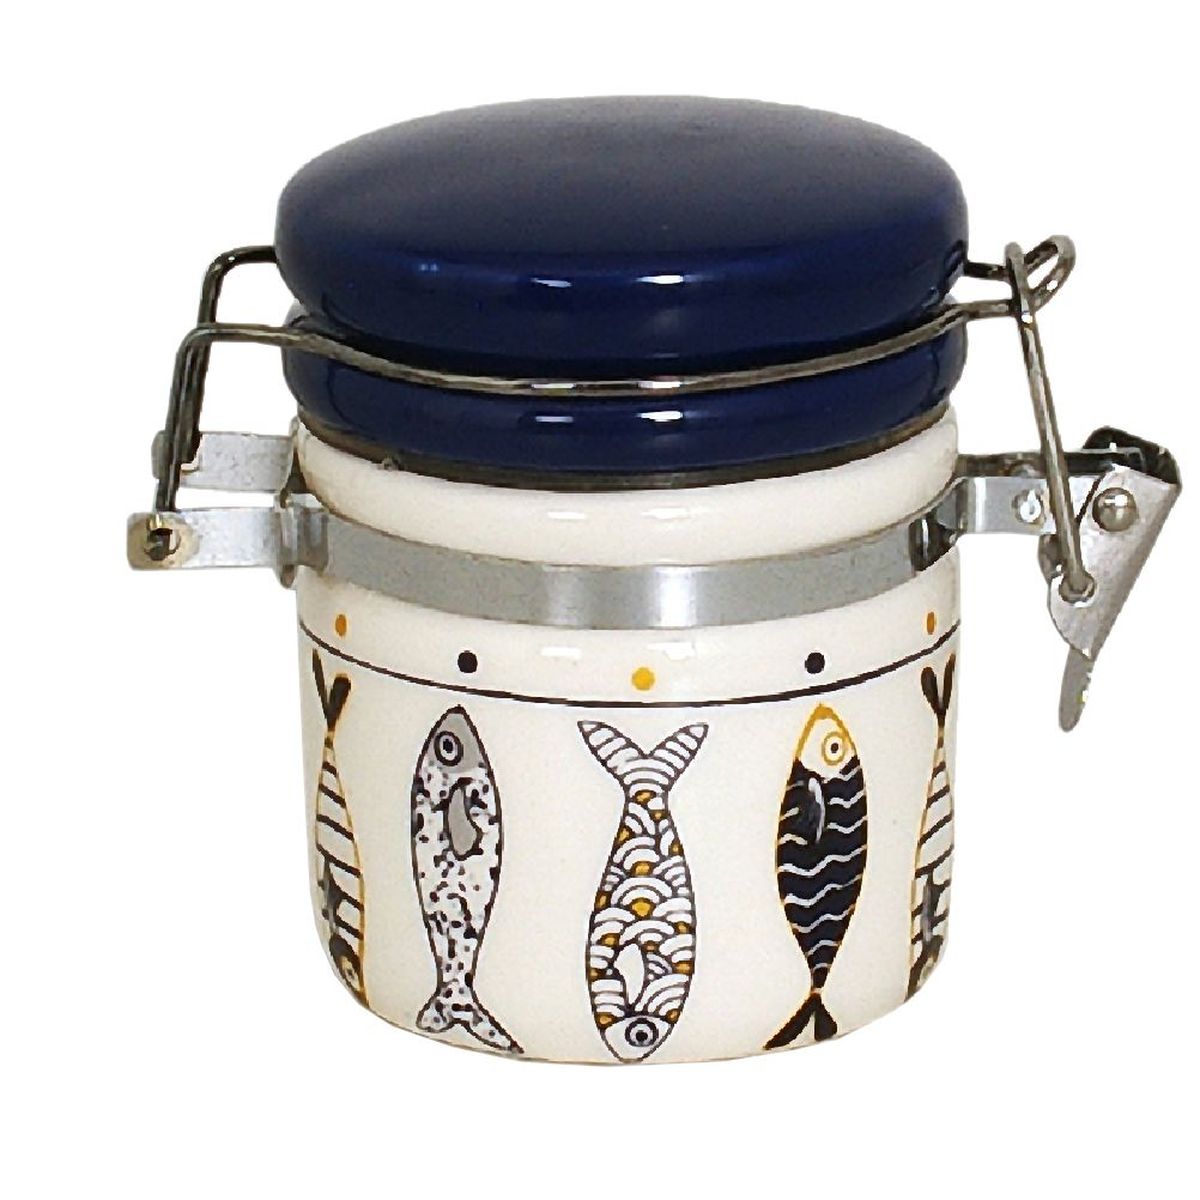 Ceramic salt pot with spoon - DORY